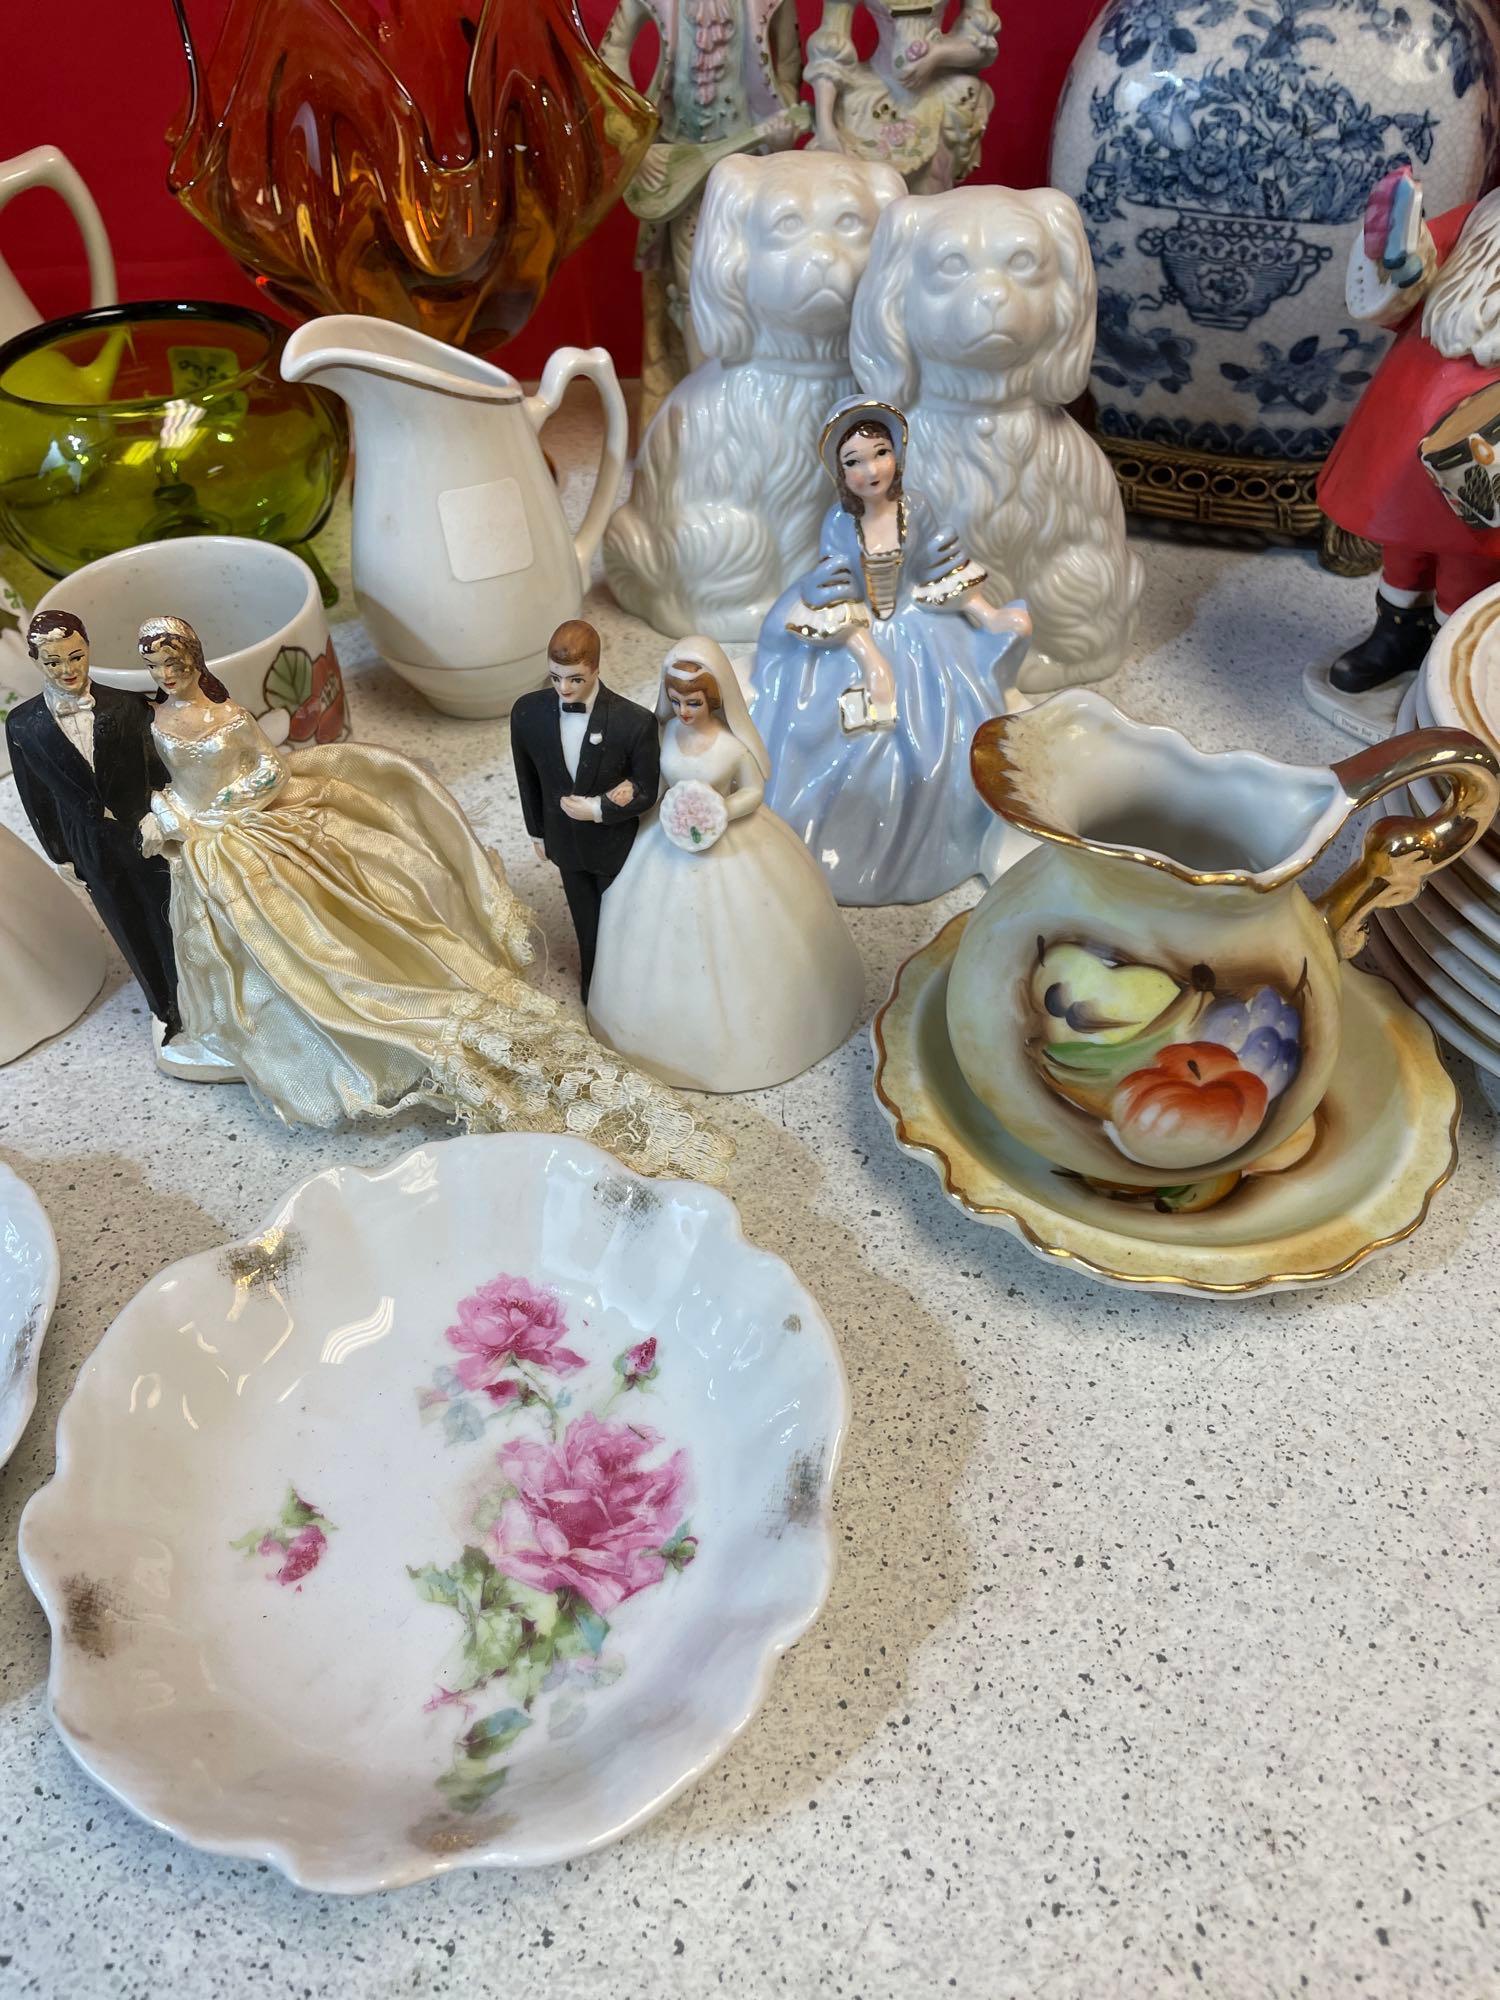 Lefton bride and groom bells, Tara porcelain cat other porcelain and glass pieces